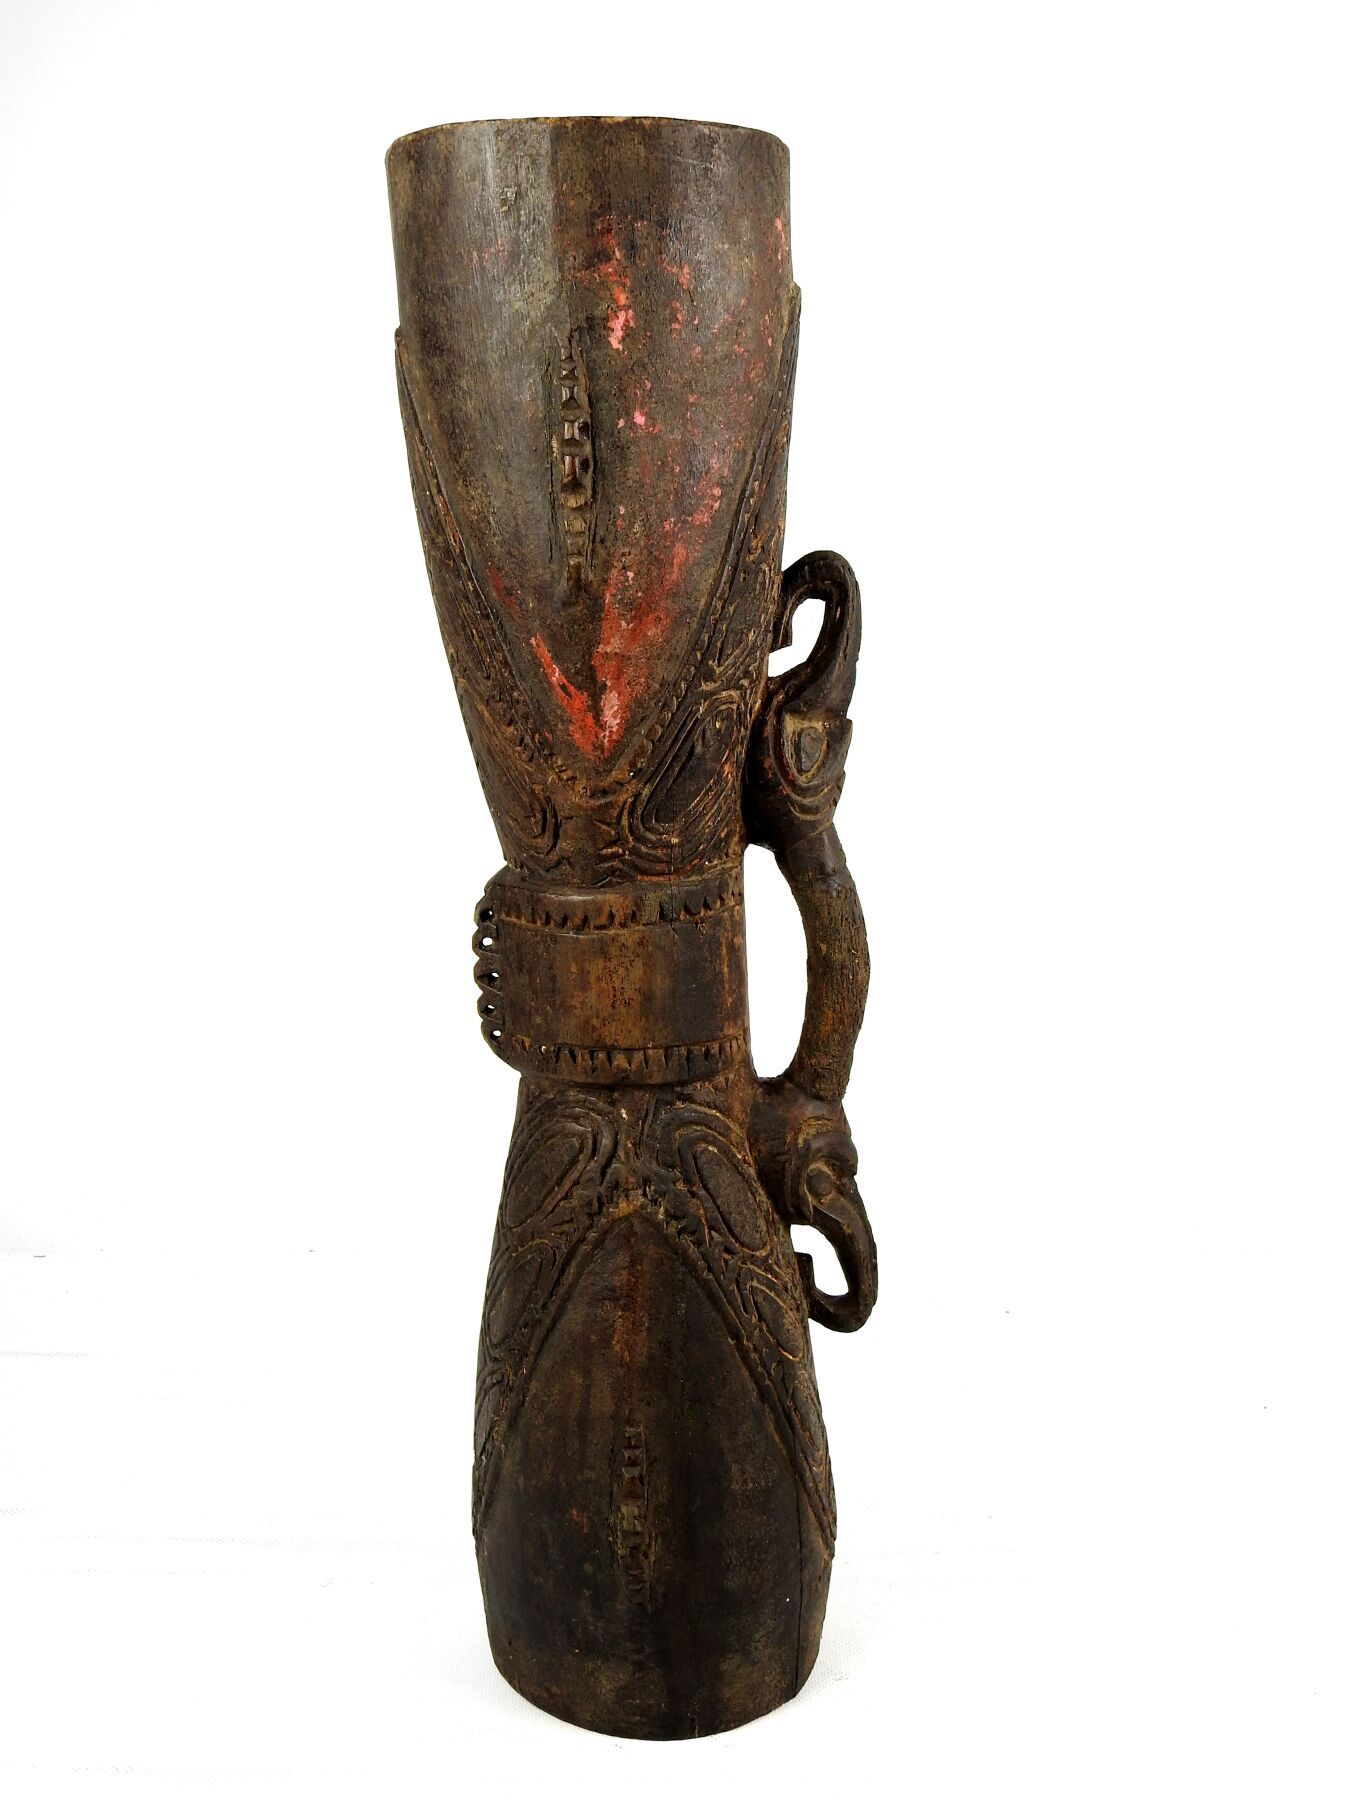 Null RAMU河，巴布亚新几内亚马当省。
木头，有使用的铜锈，多色性。
Kundu "便携式鼓盒，无膜，手柄两端雕有造型脸谱，盒上装饰有深雕刻。
高度：59&hellip;